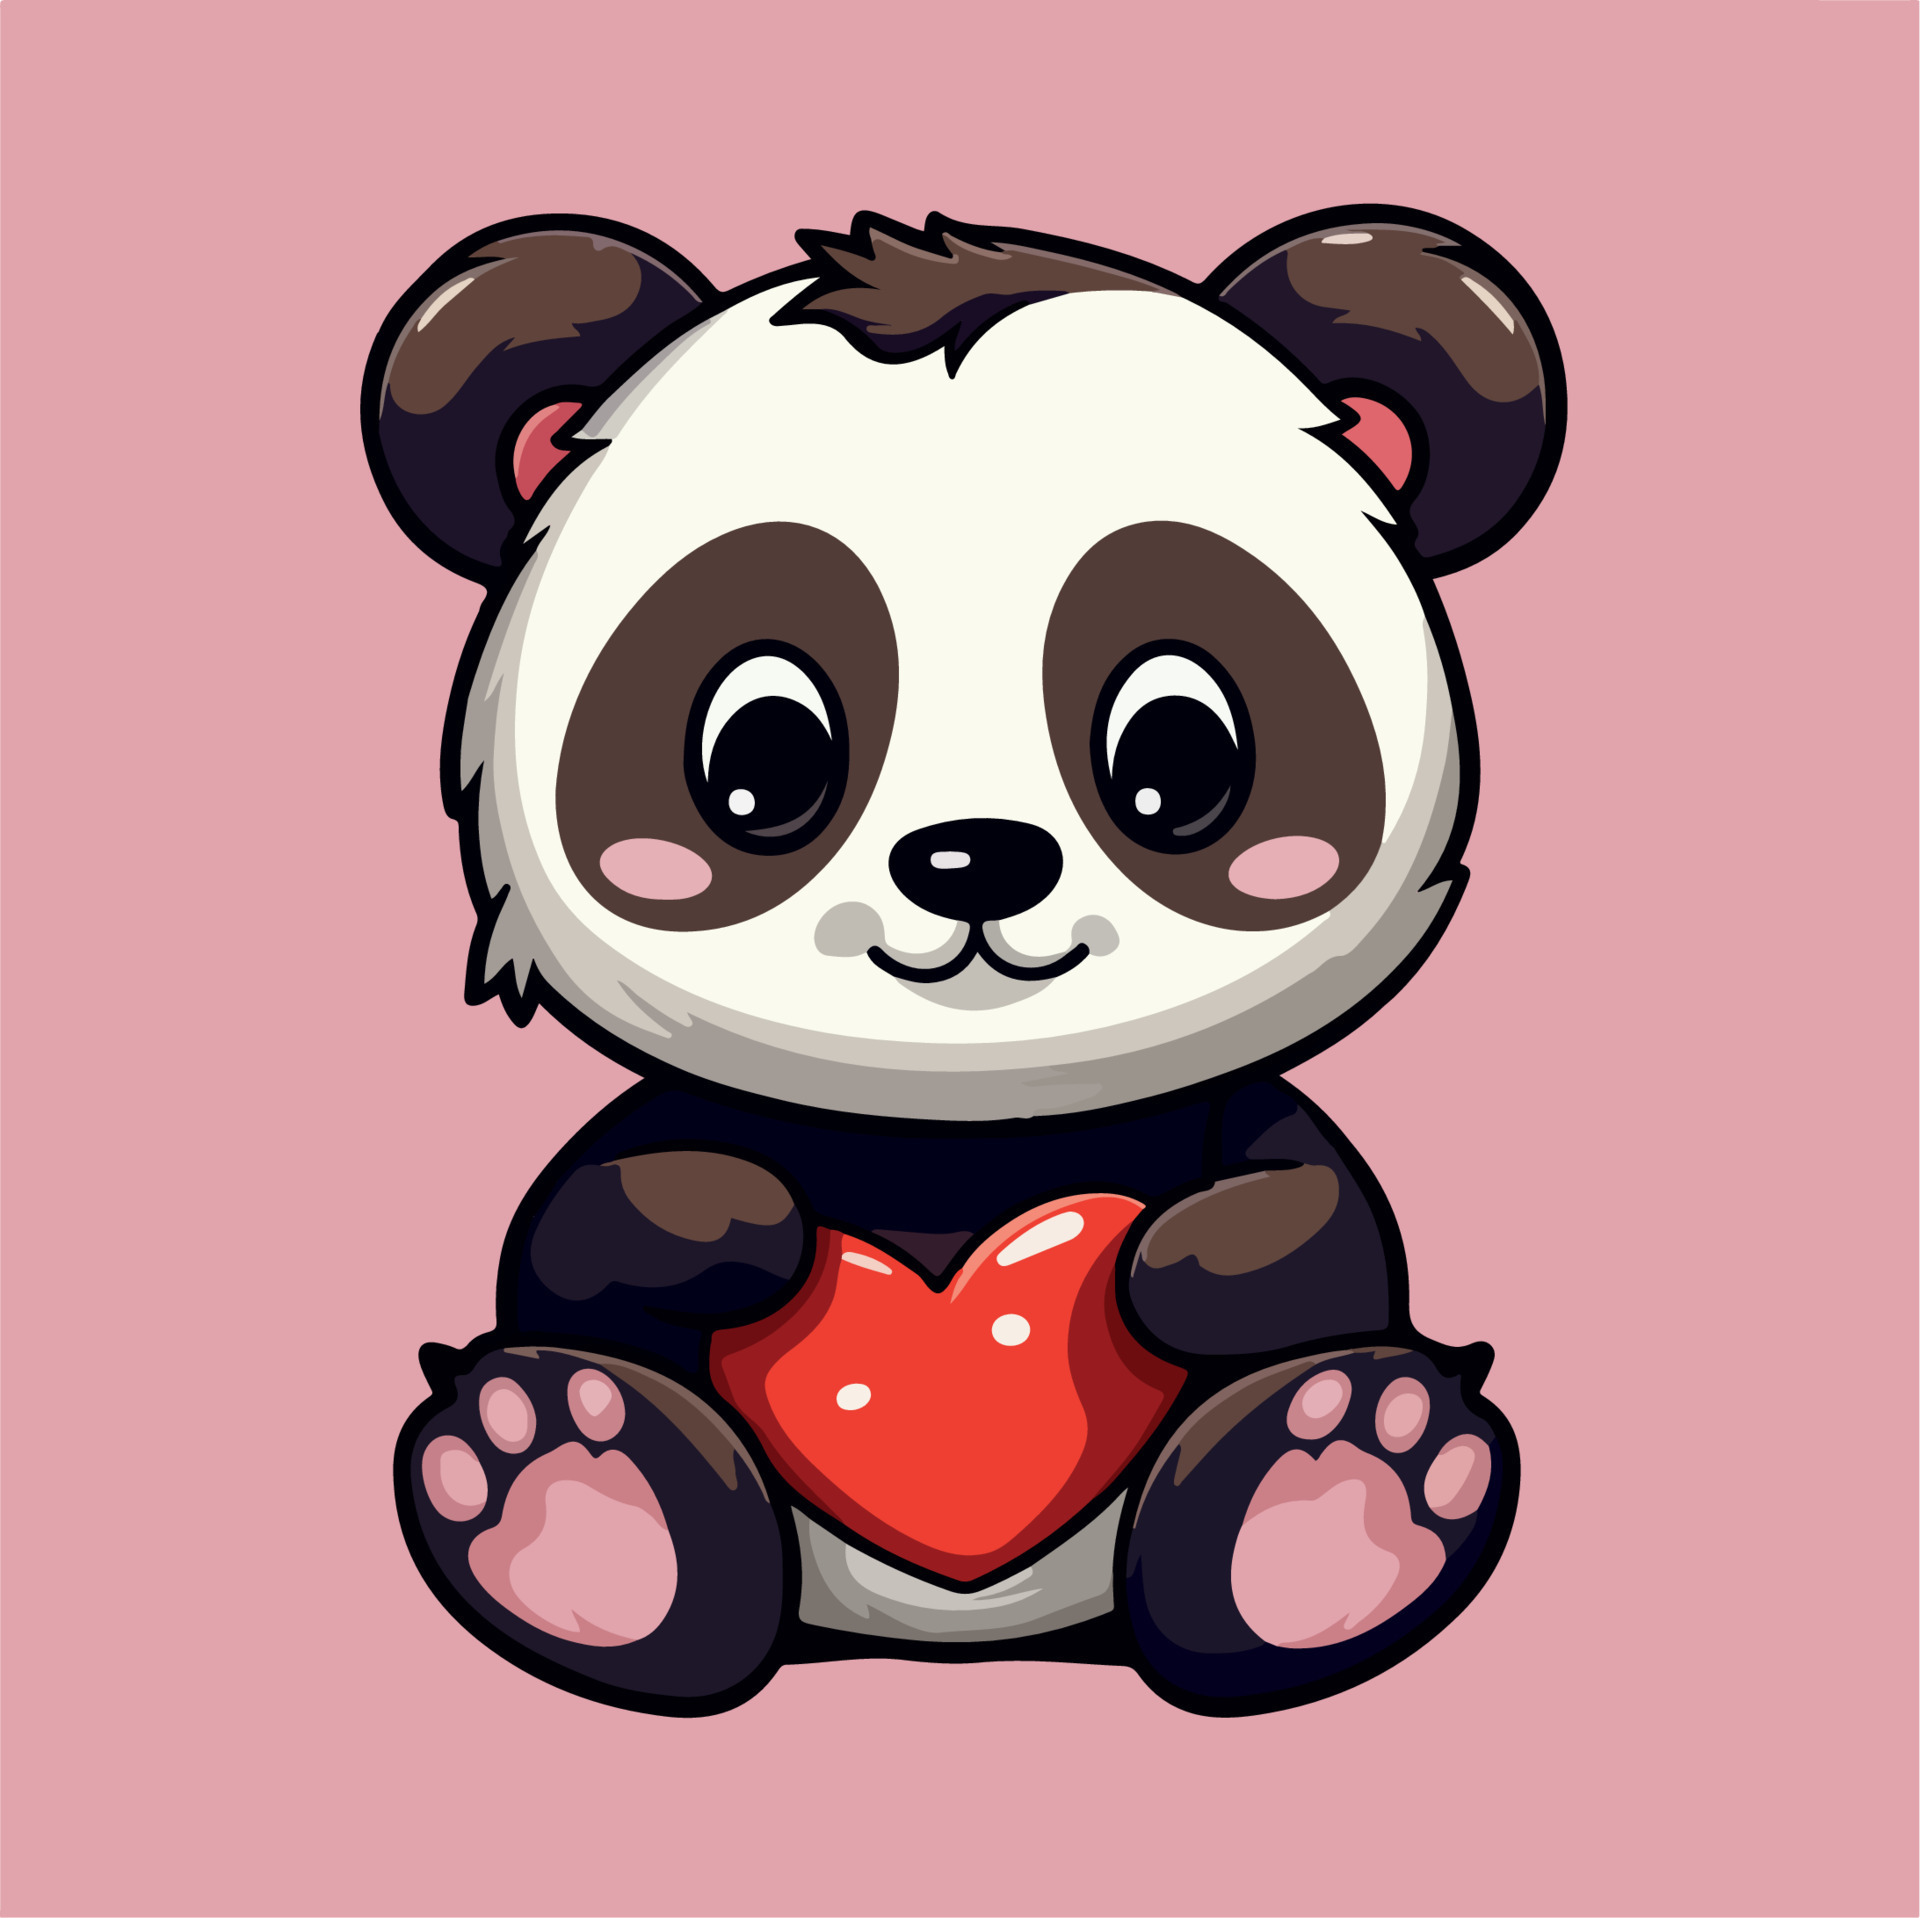 Cute panda drawing kawaii Funny Vector Illustration eps 10 23826009 Vector  Art at Vecteezy